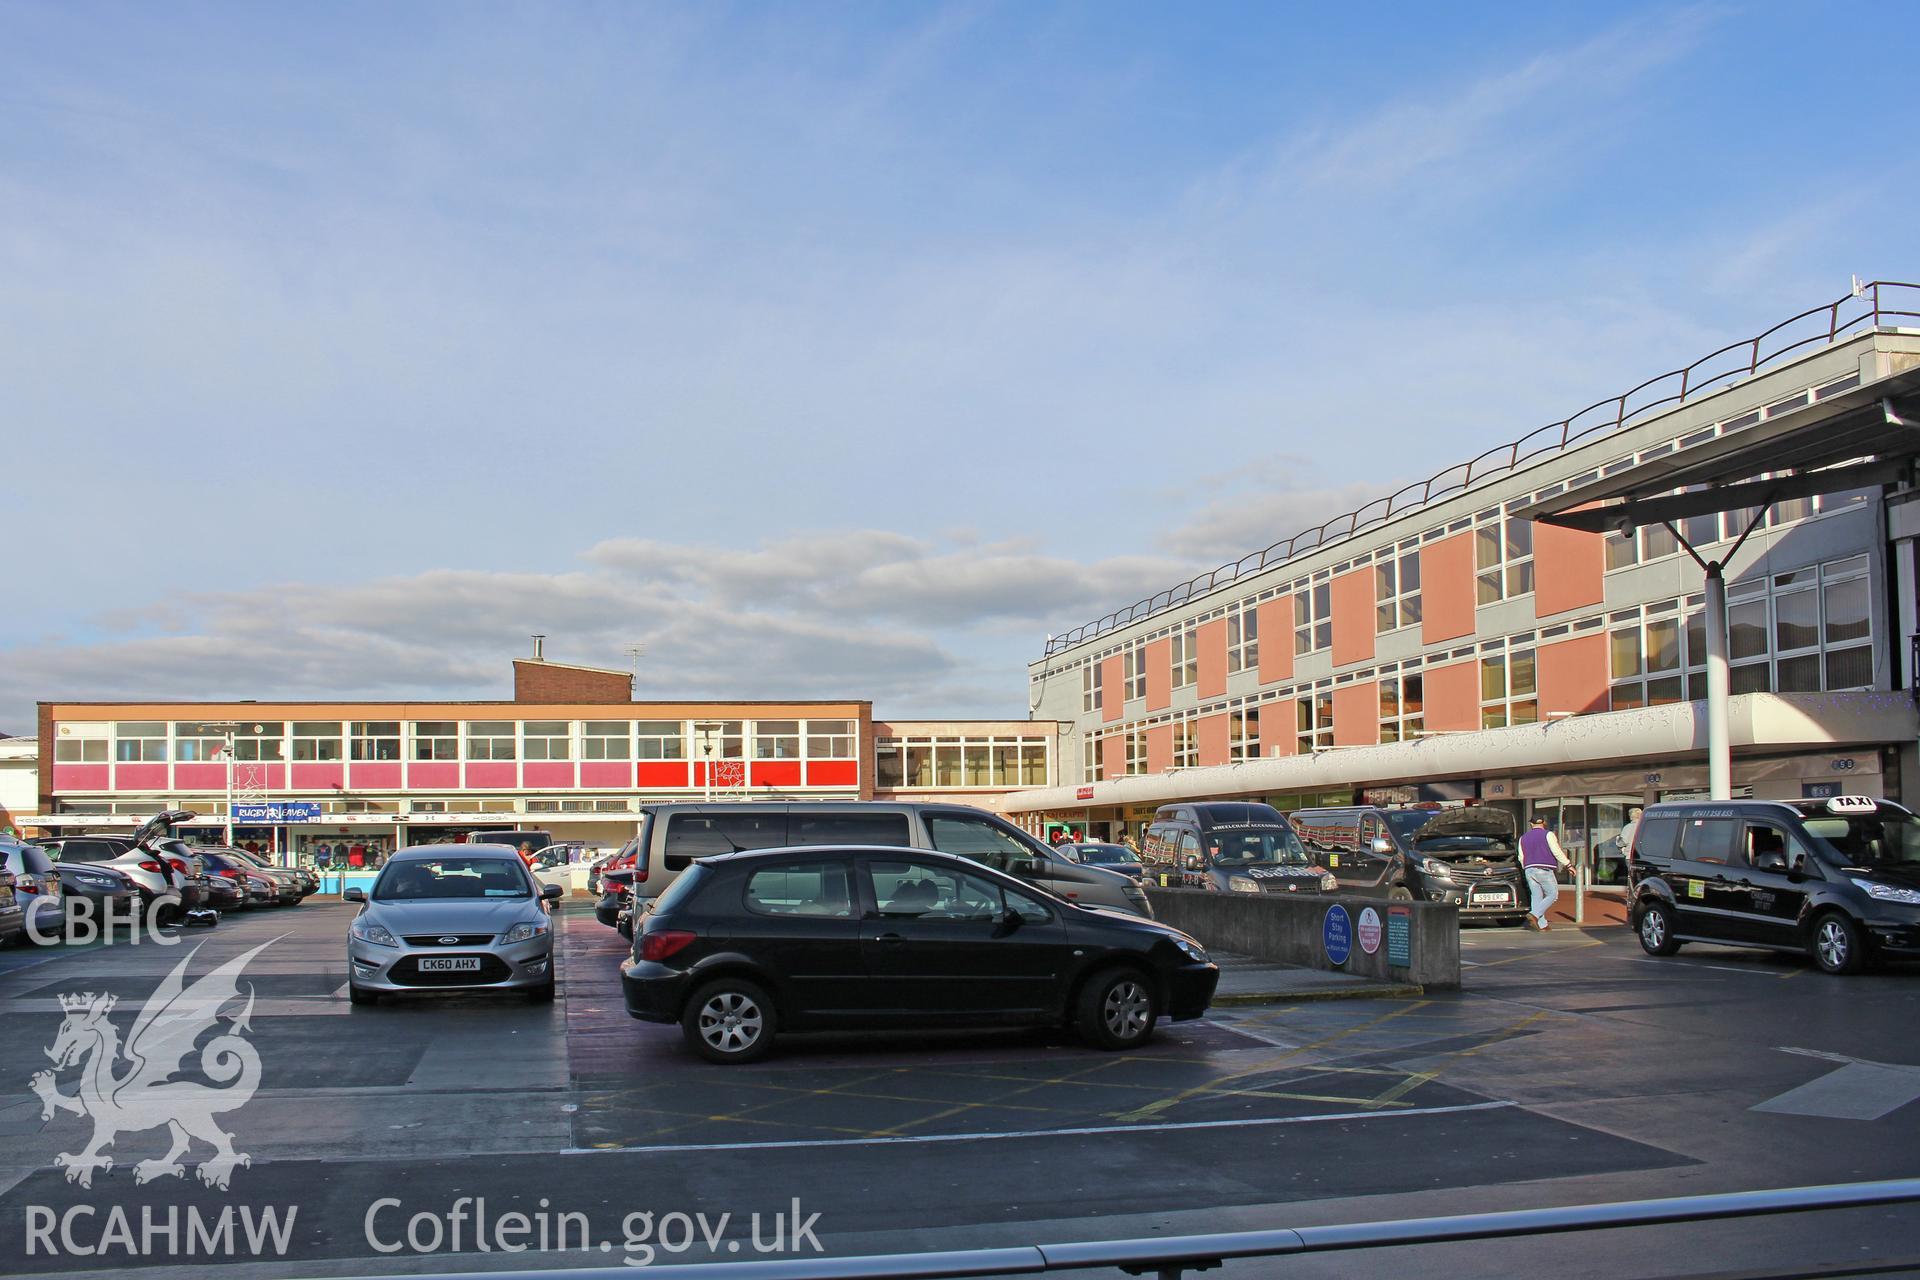 Cwmbran Shopping Centre's car park. Photograph taken by Sue Fielding in November 2017.